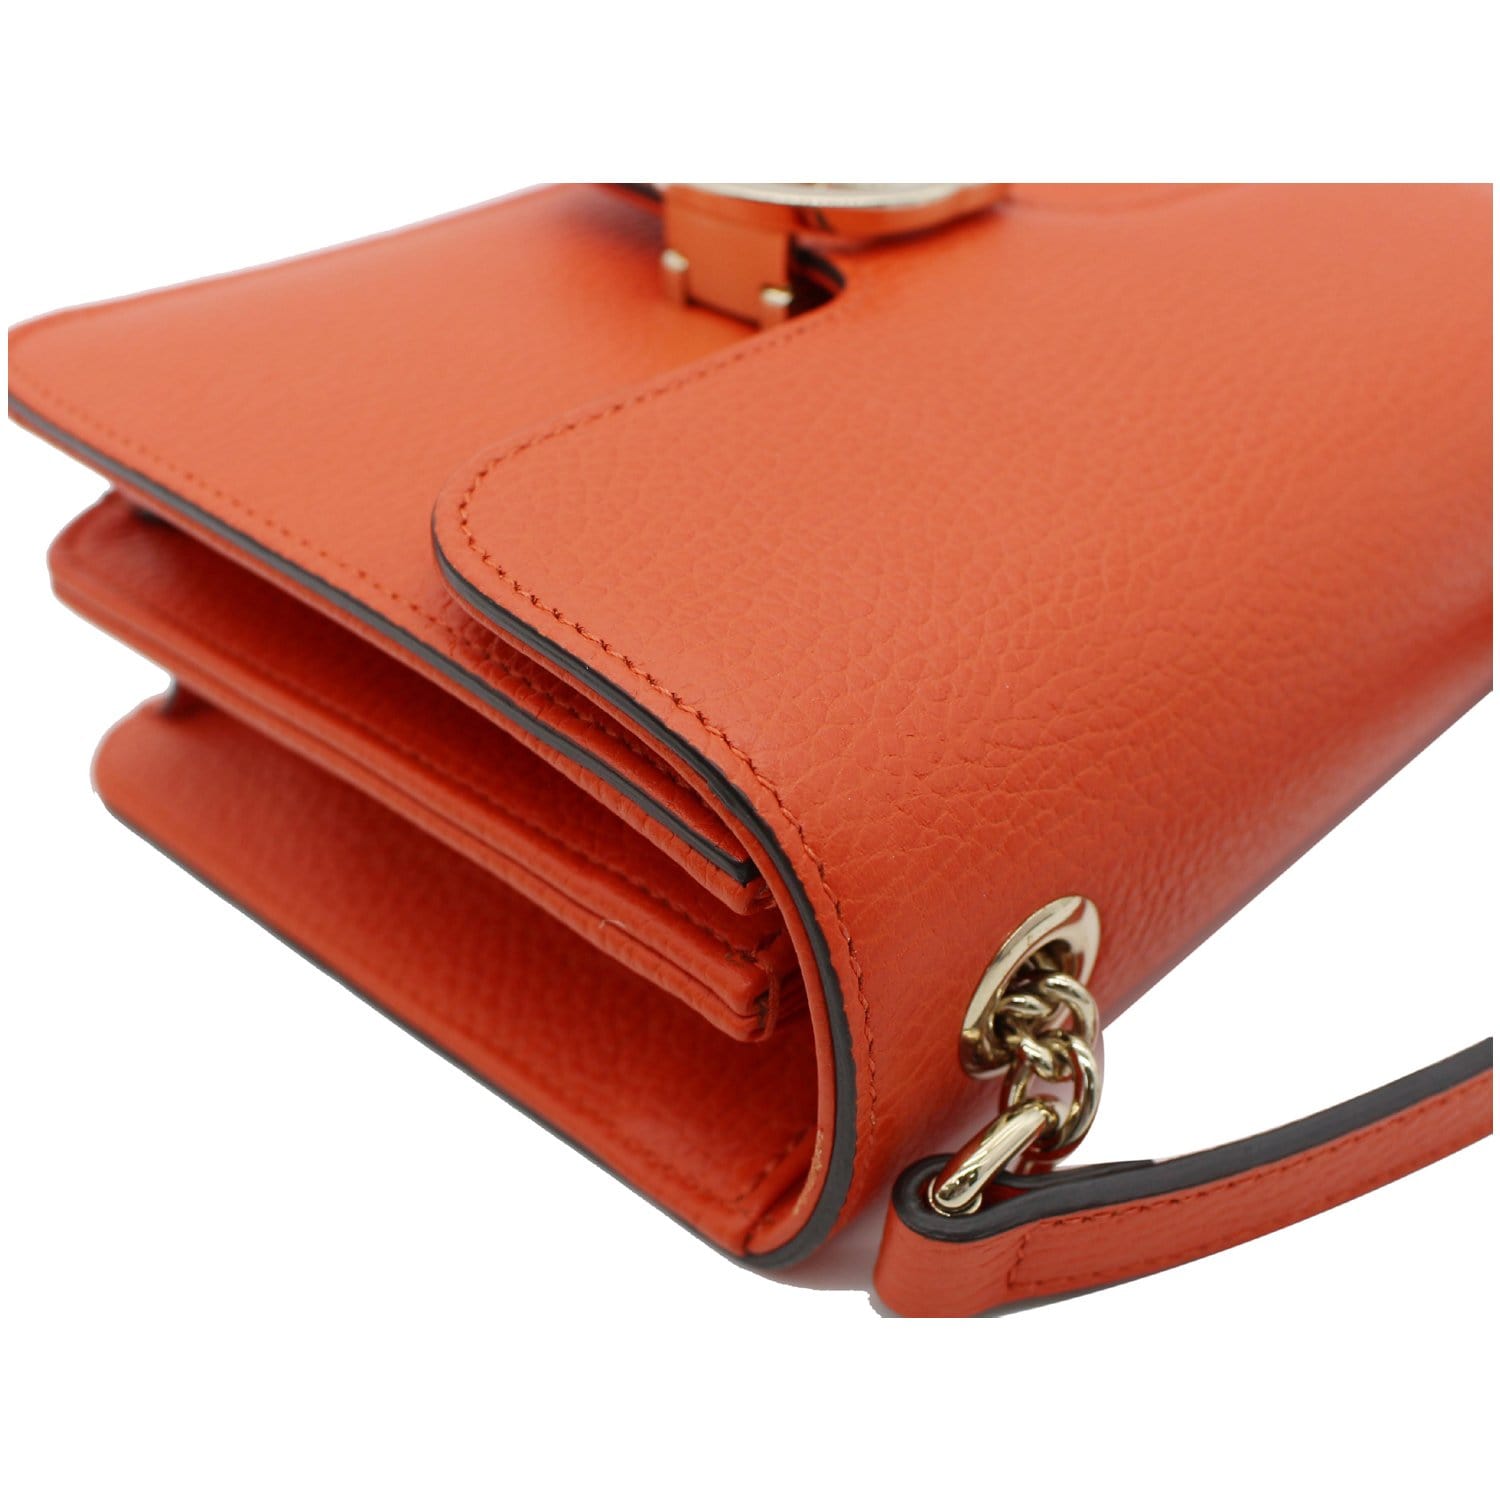 Gucci Orange Pebbled Leather Interlocking G Medium Shoulder Bag